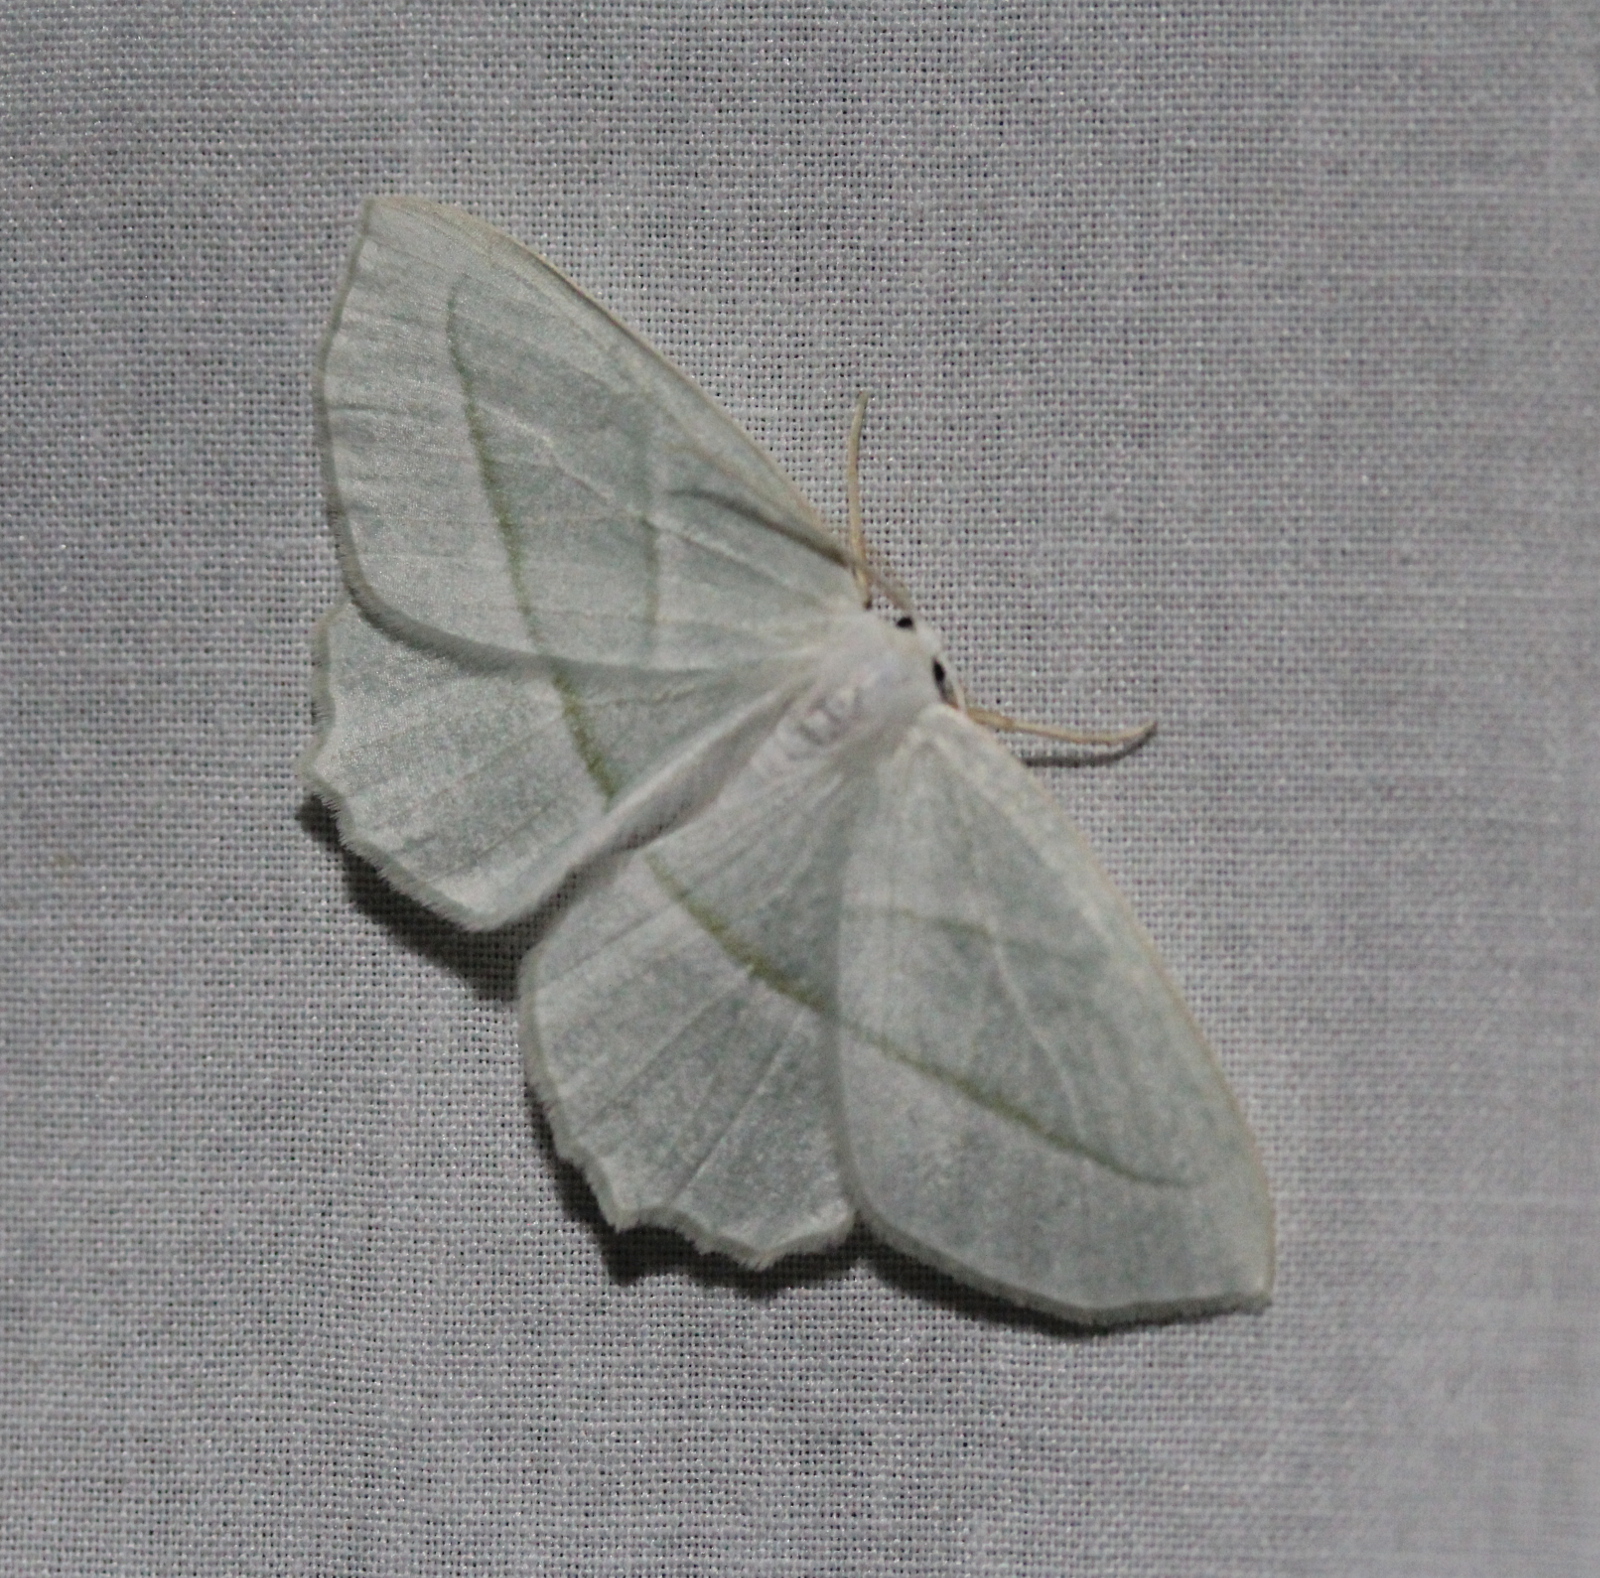 mostly white moth on white sheet